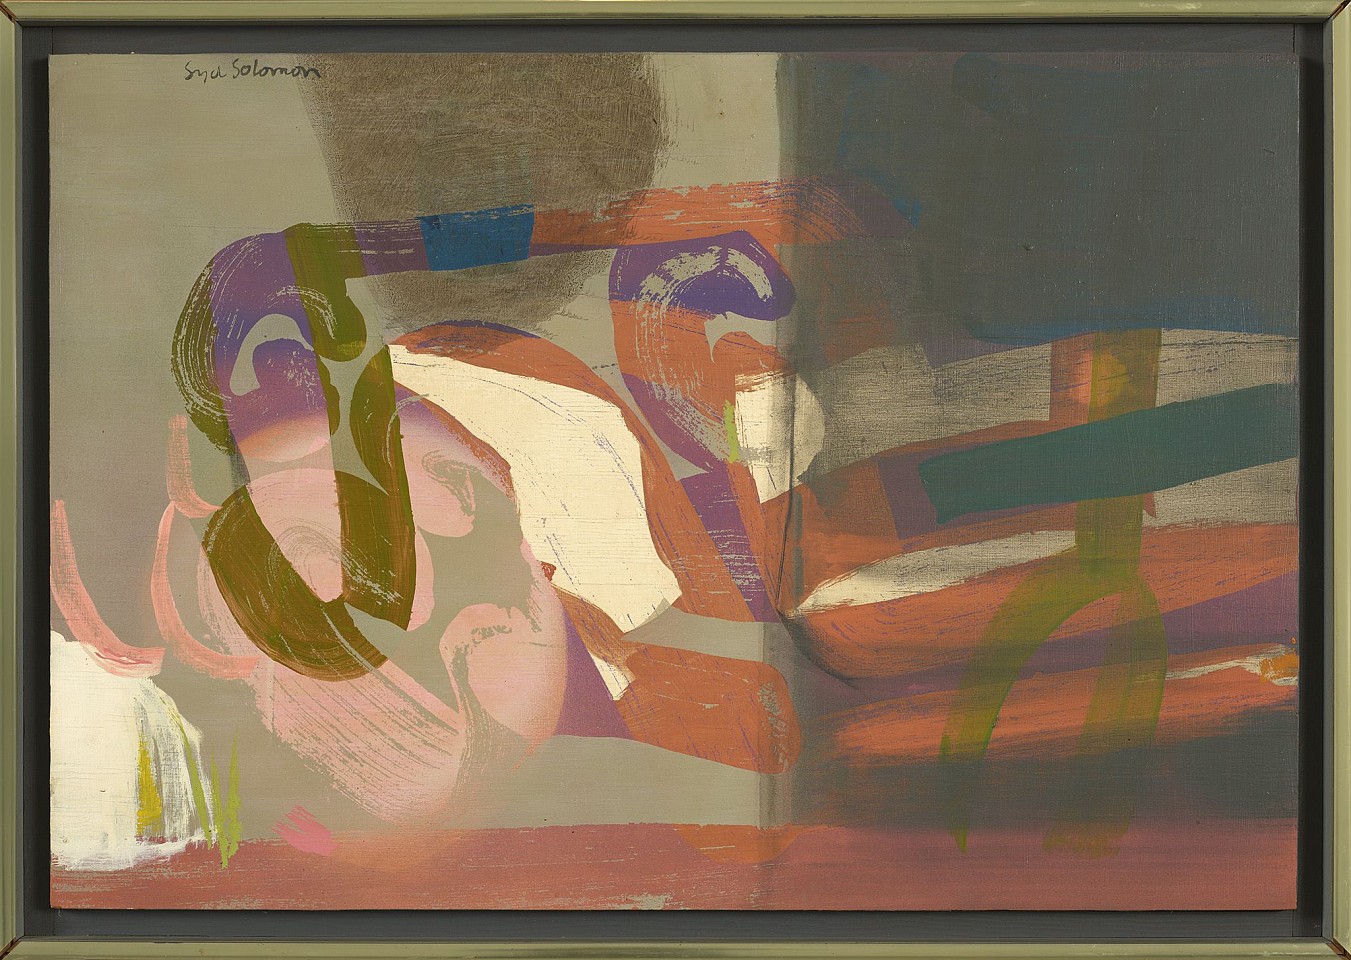 Syd Solomon, Juneday Strata, 1969
Acrylic on panel, 22 x 32 in. (55.9 x 81.3 cm)
SOL-00217